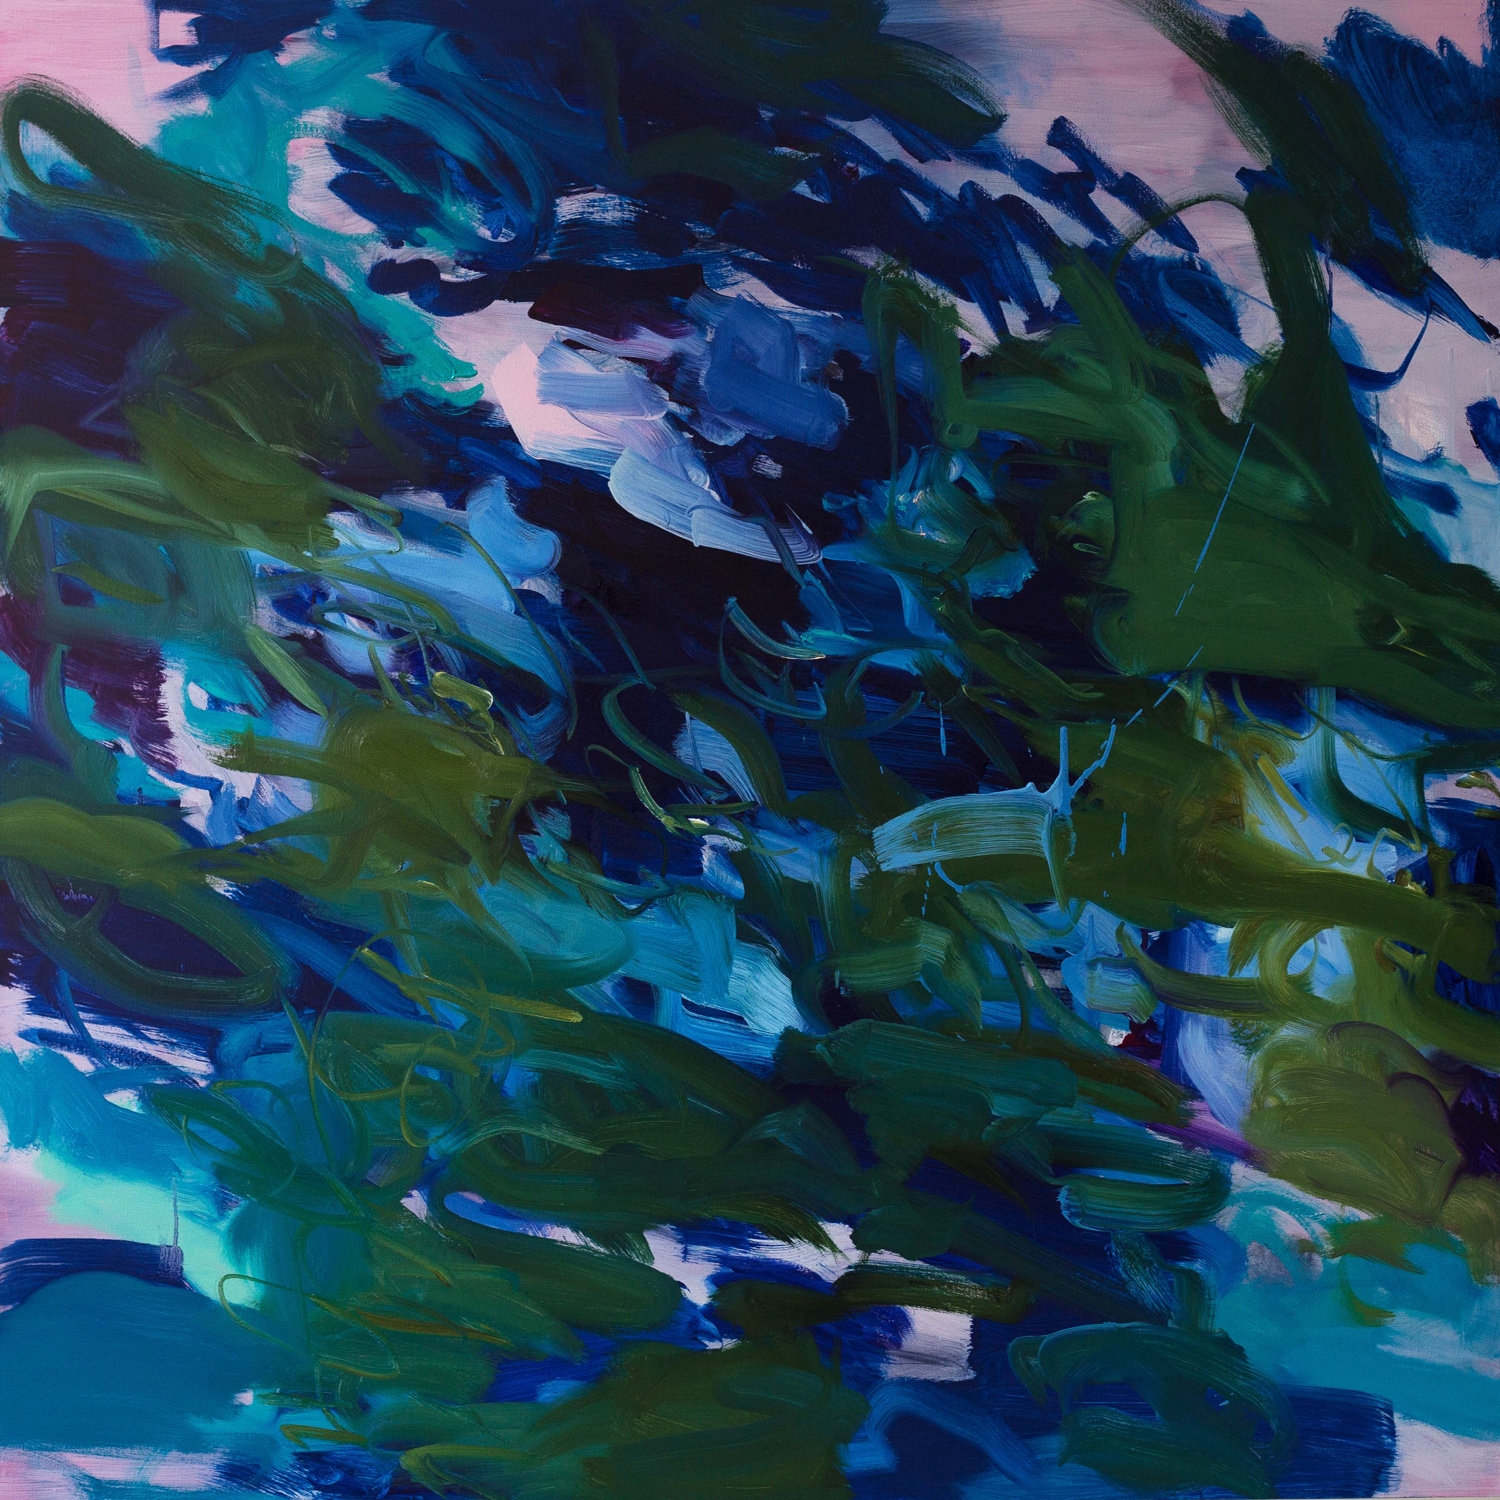  Untitled  (phlalo-irgazine  -turquoise)  2016  oil on canvas  145 x 145 cm 